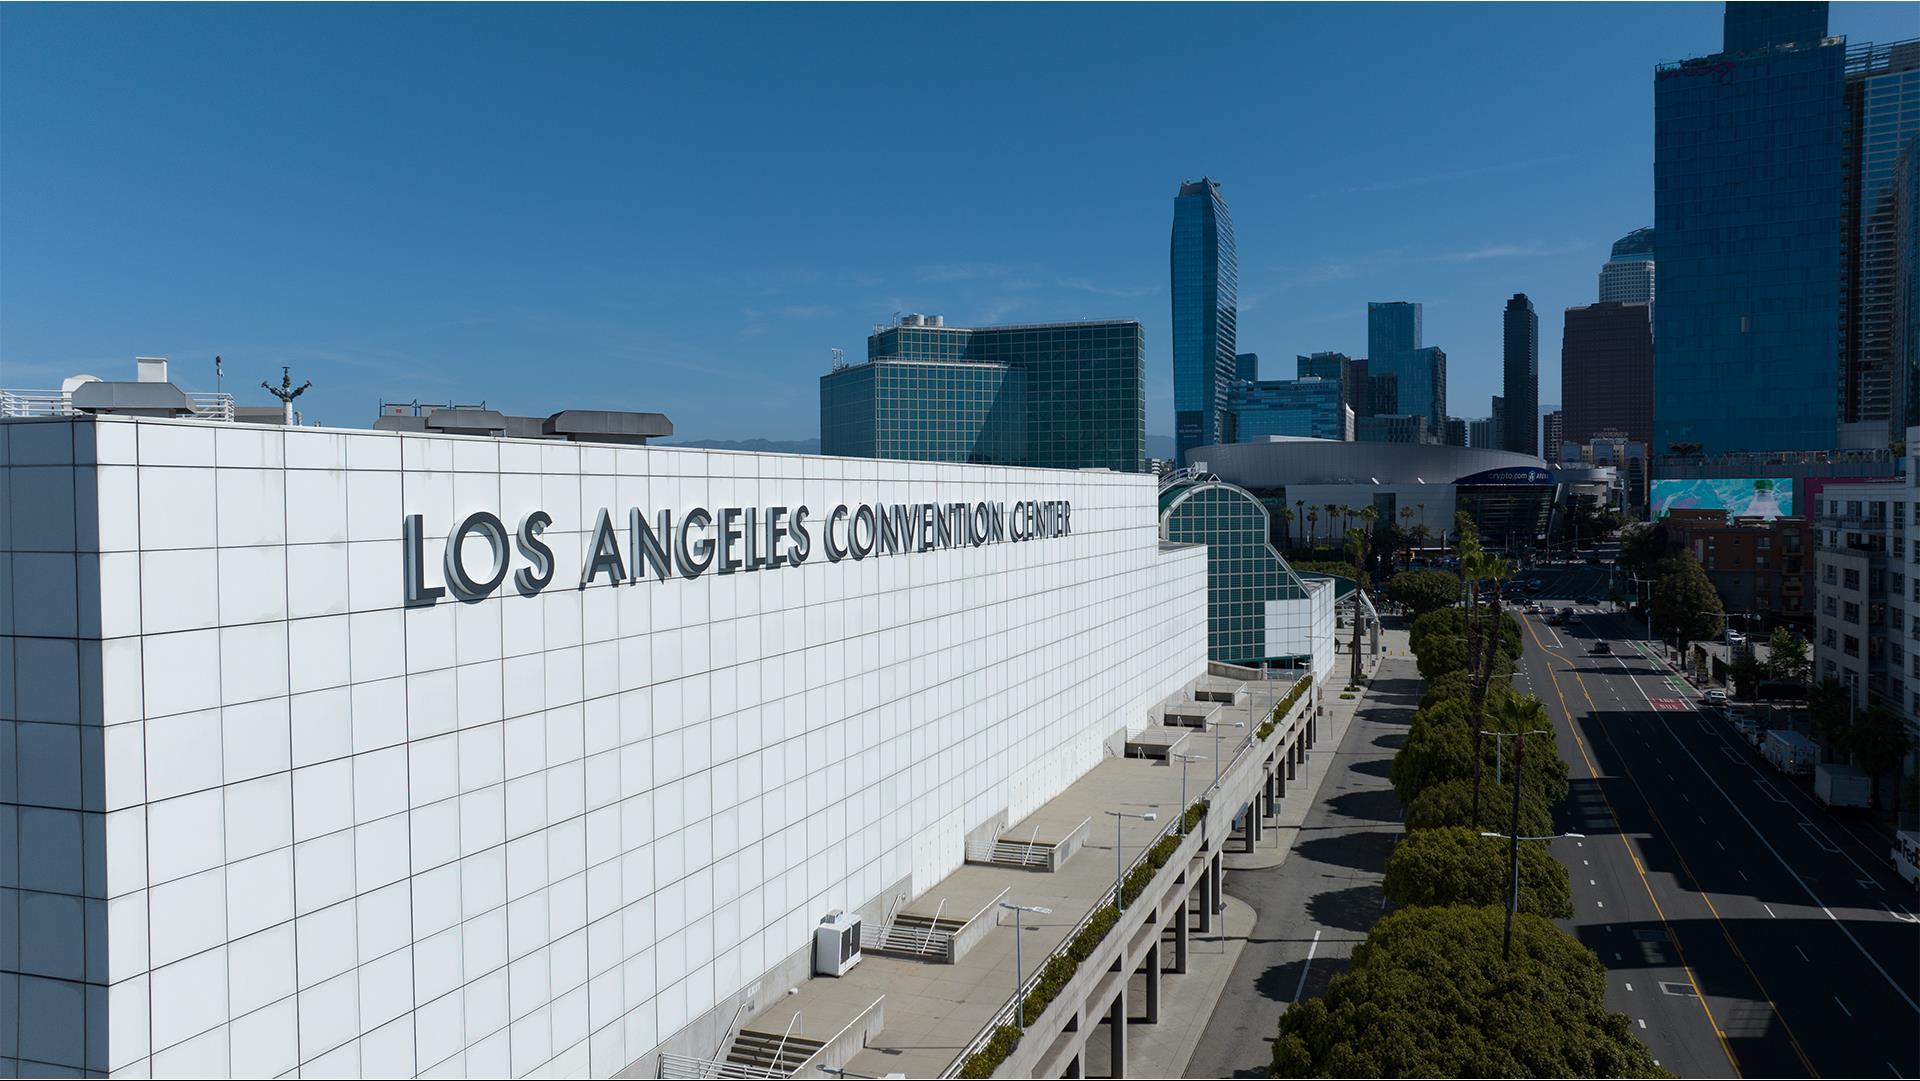 Los Angeles Convention Center in Los Angeles, CA